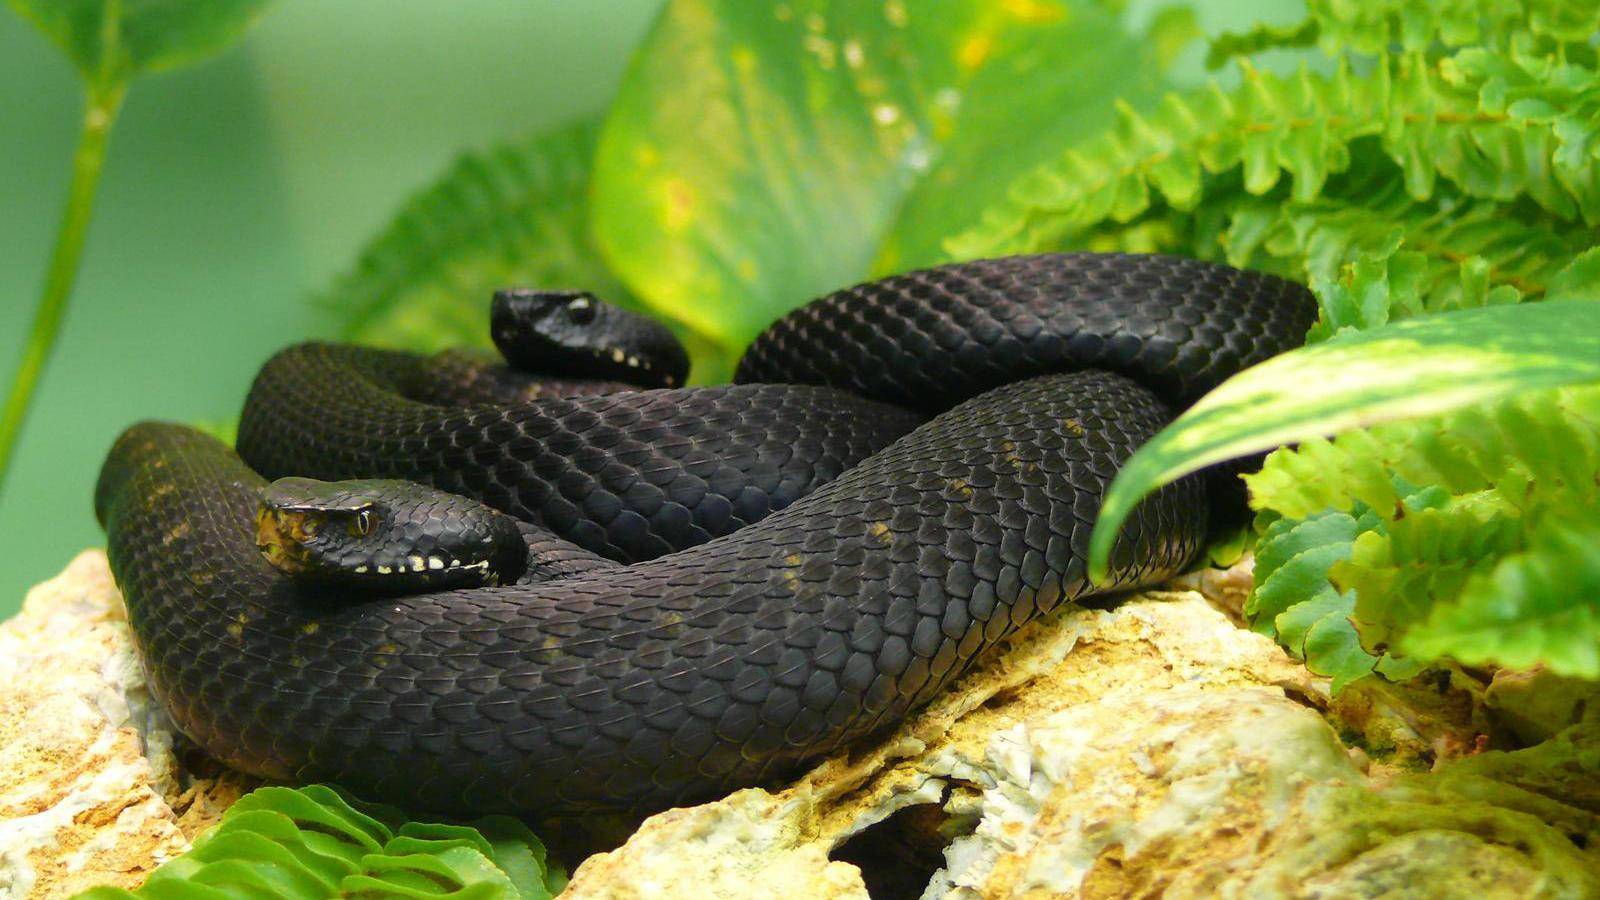 Black Mamba Snake Wallpapers | Black Mamba Snake Images | Cool ...